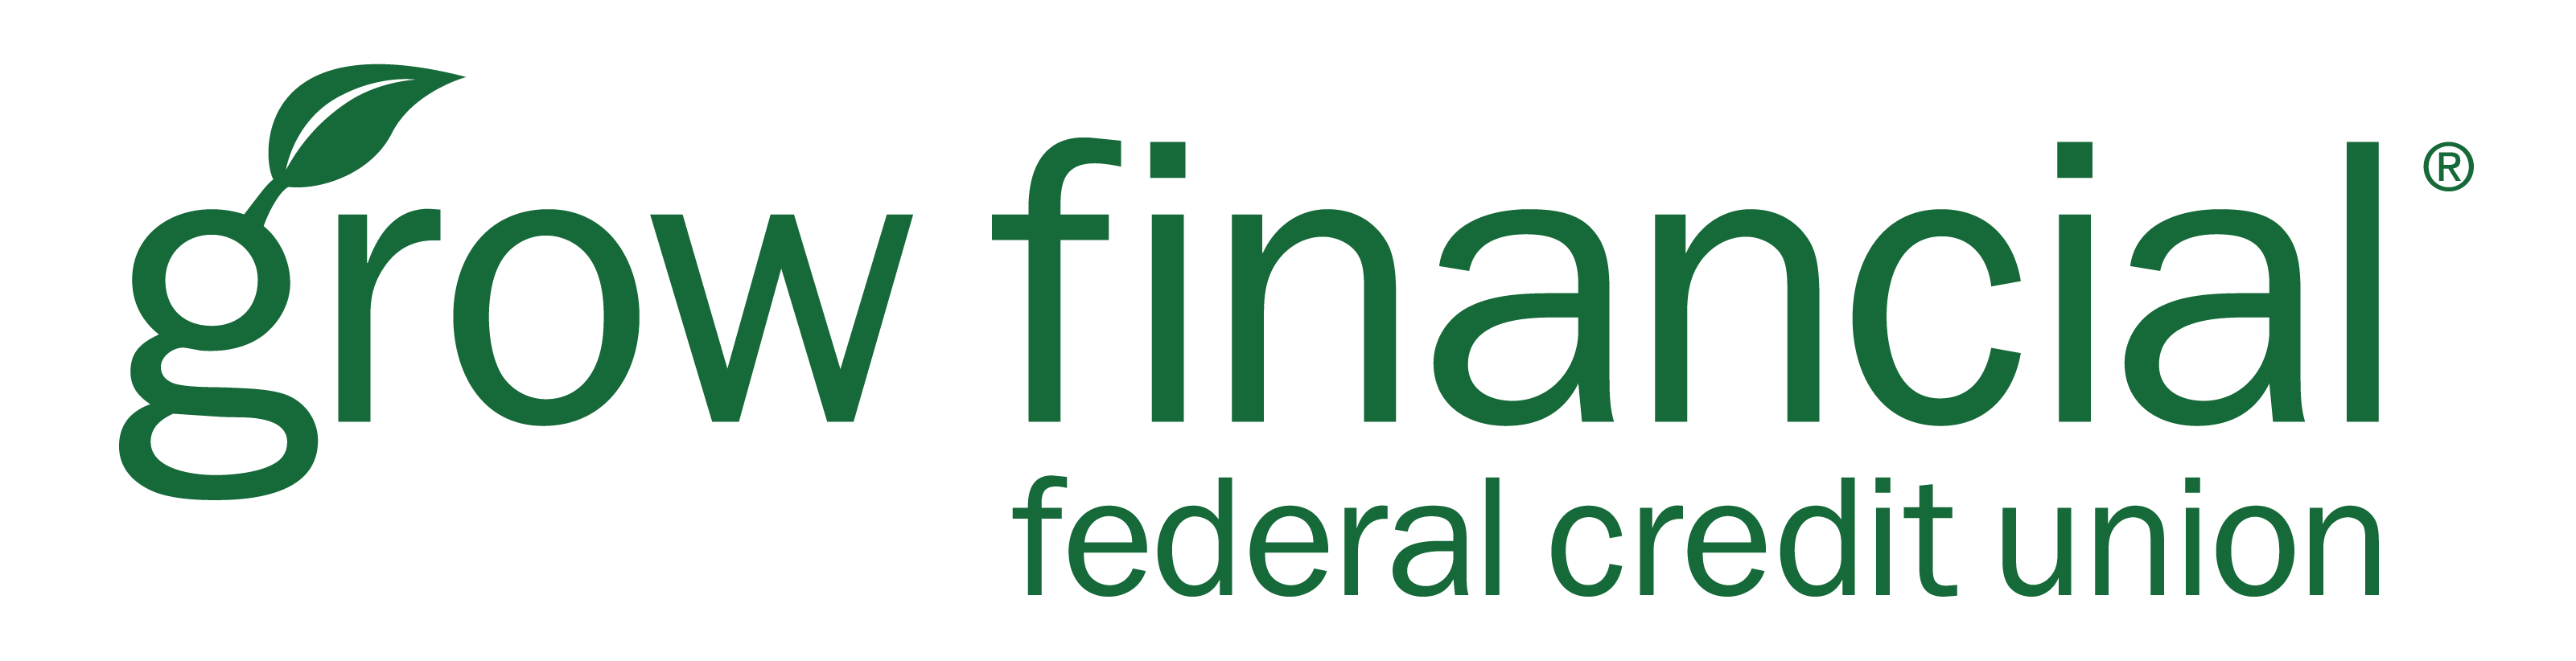 Grow Financial Federal Credit Union Company Logo